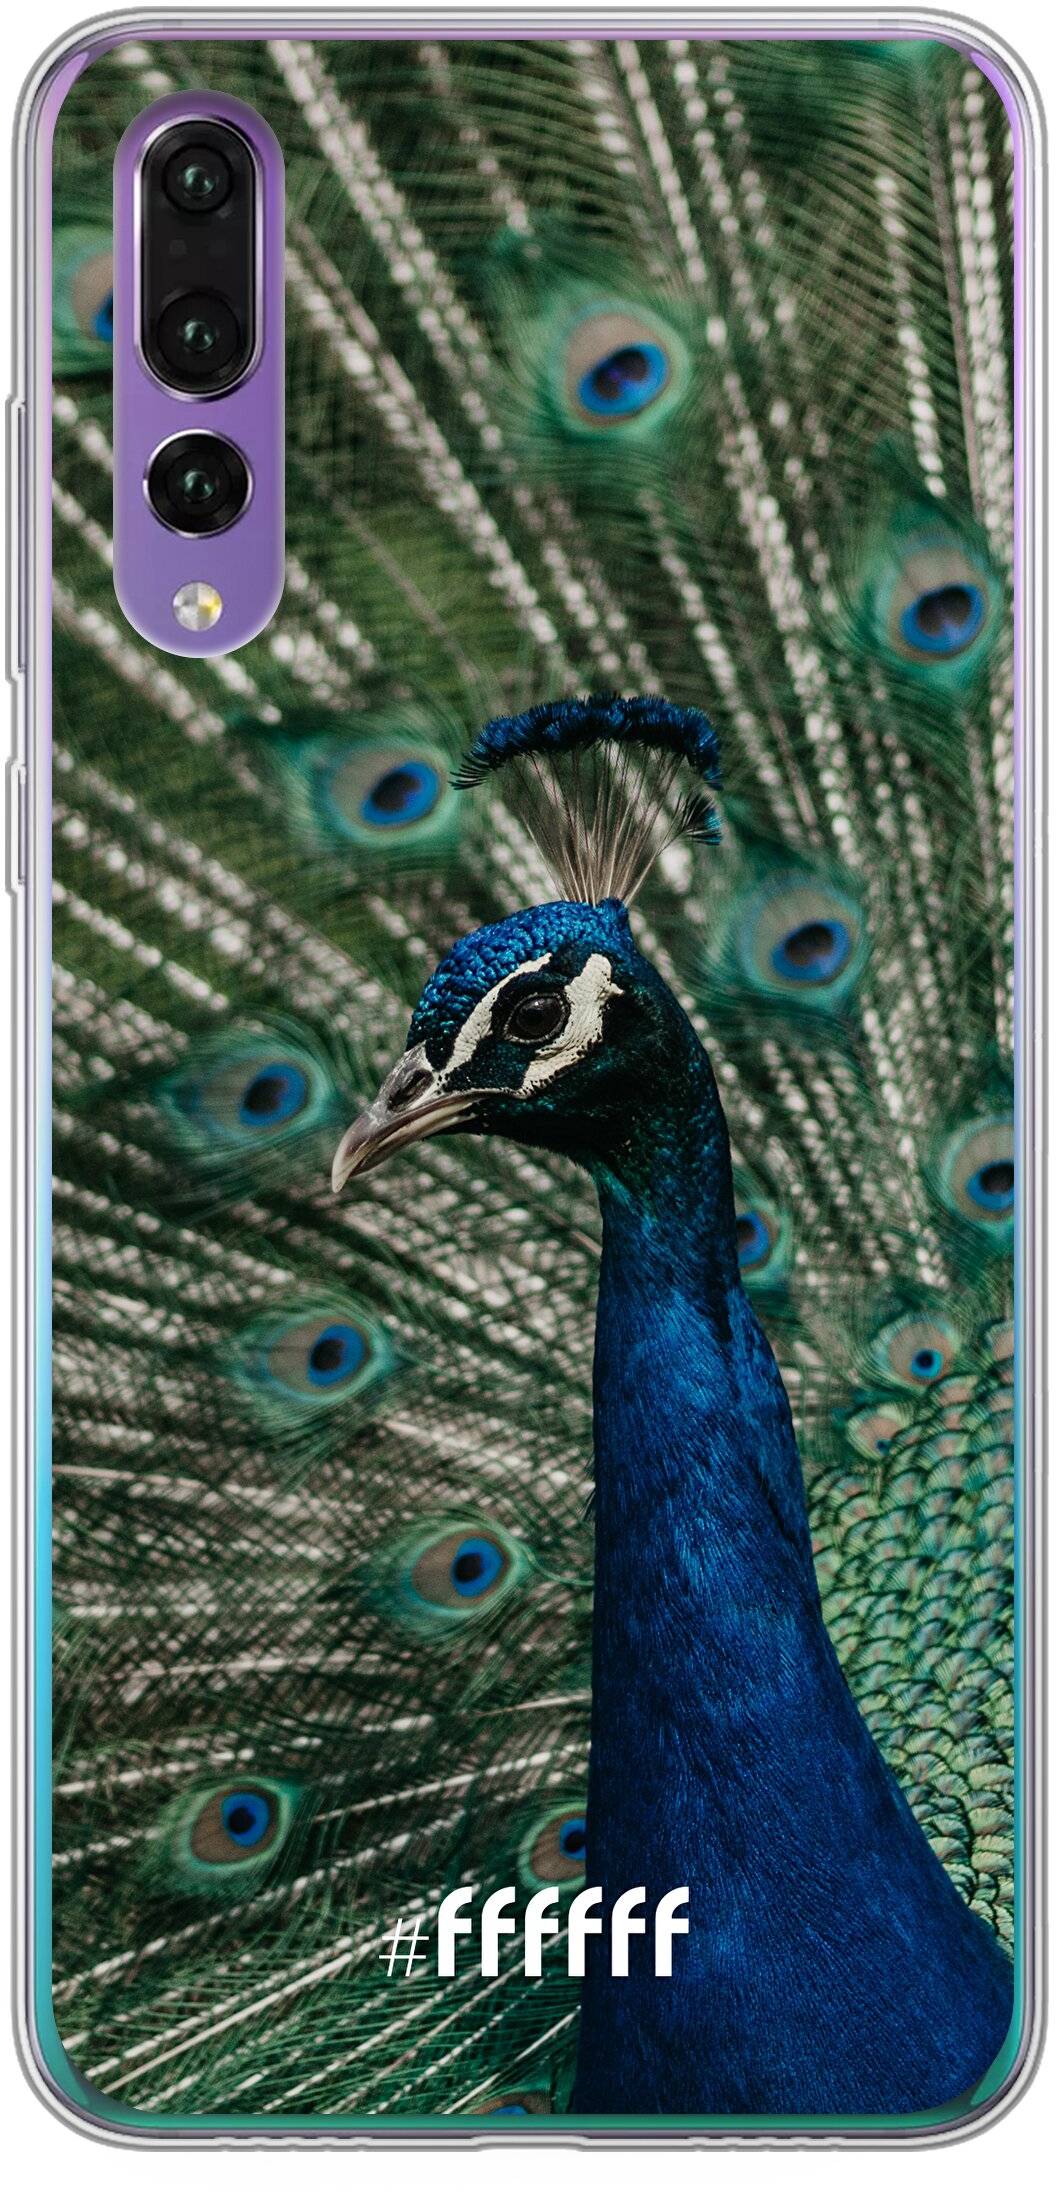 Peacock P30